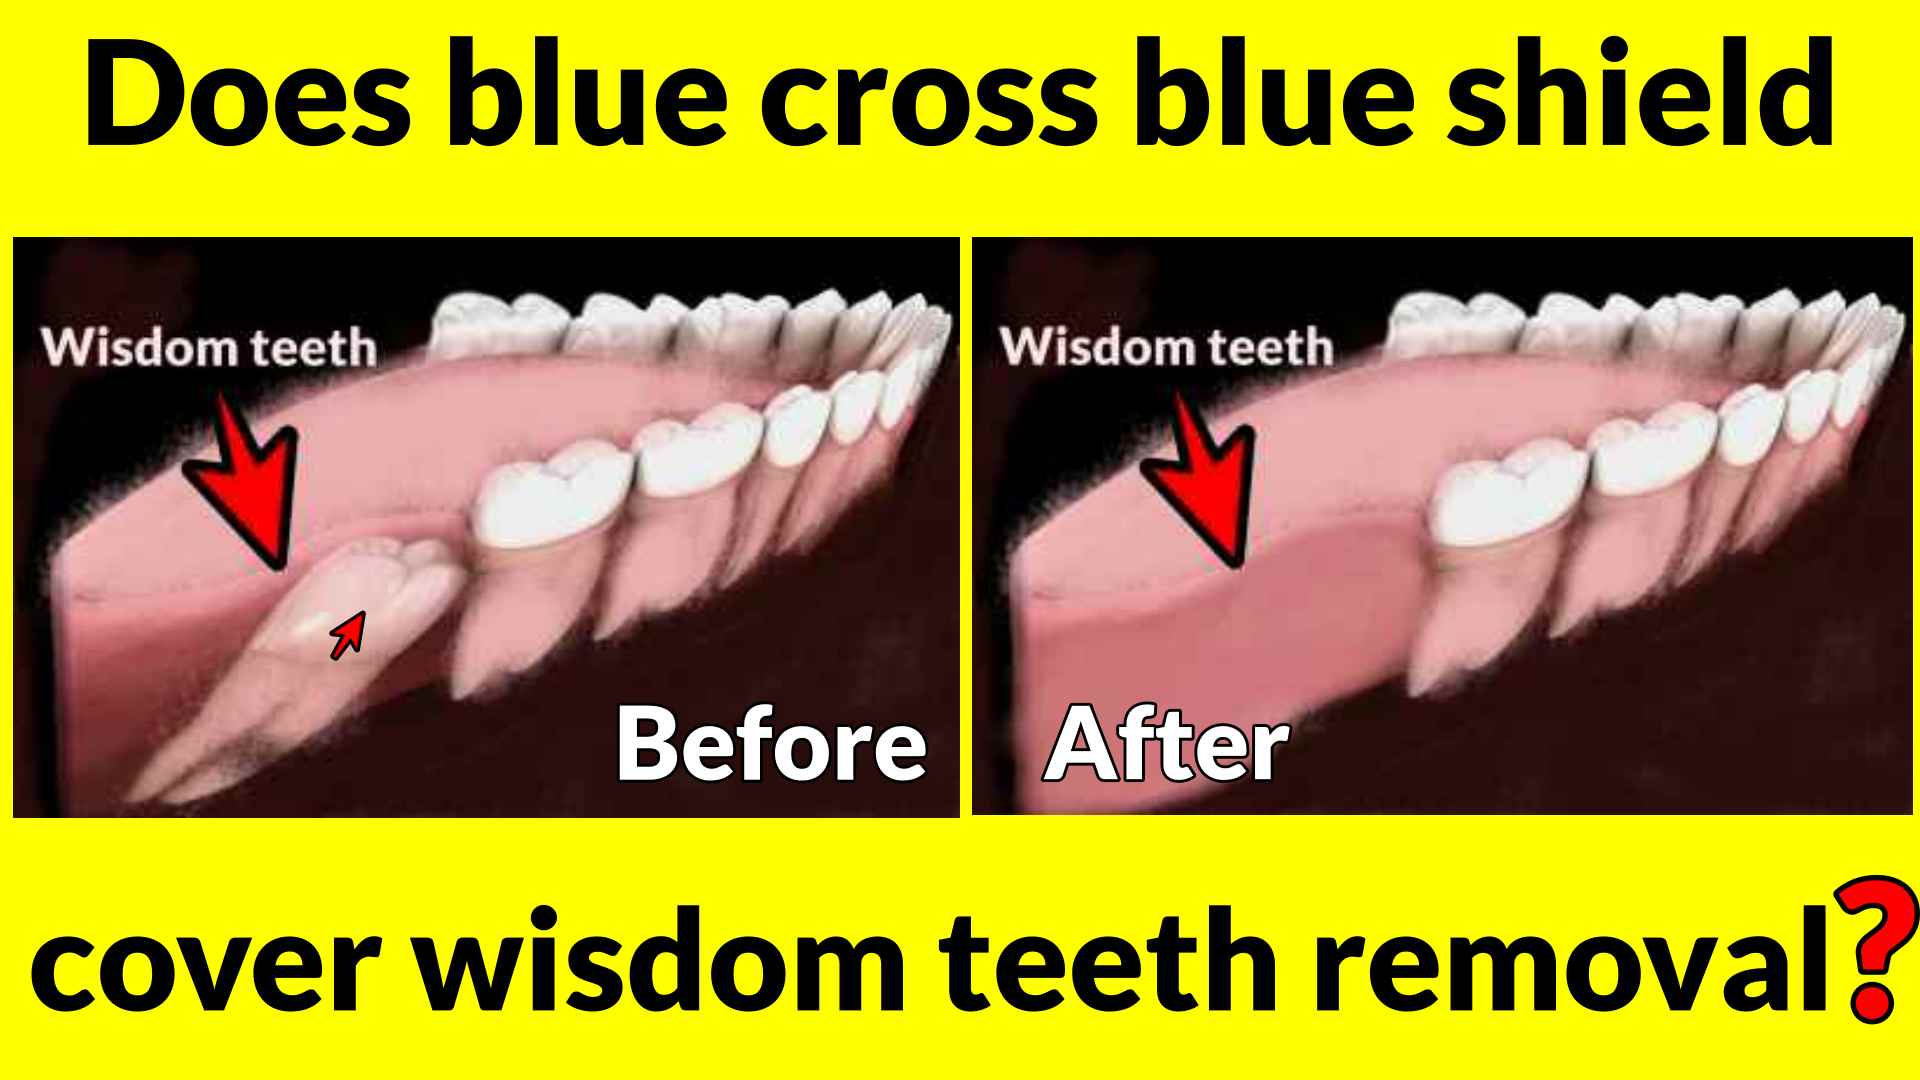 Does blue cross blue shield cover wisdom teeth removal